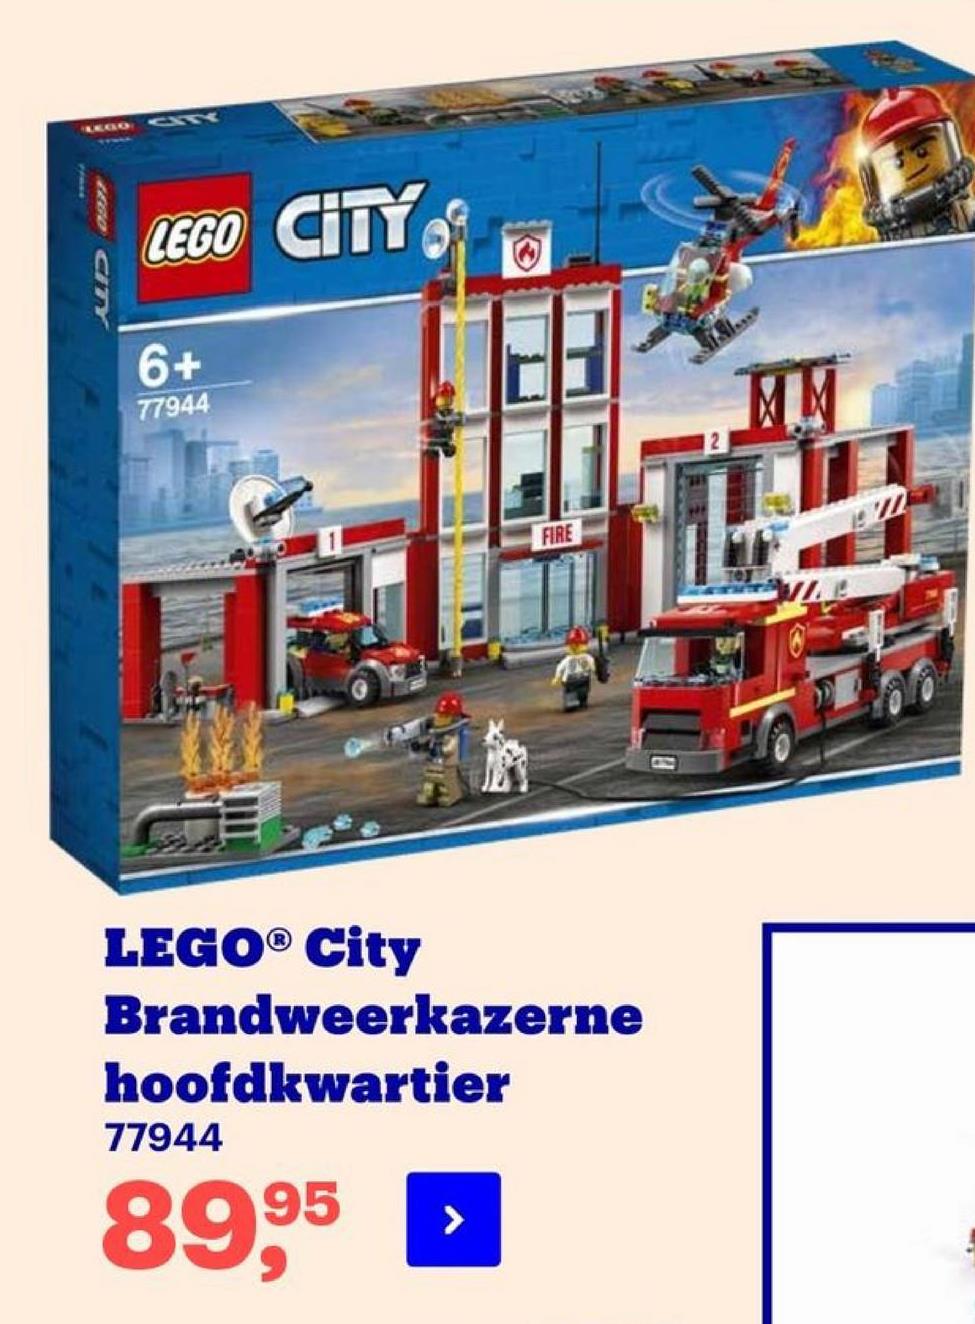 O
LED
LEGO CIT
LEGO CITY
6+
77944
MM
FIRE
LEGO® City
Brandweerkazerne
hoofdkwartier
77944
95
>
89,99
